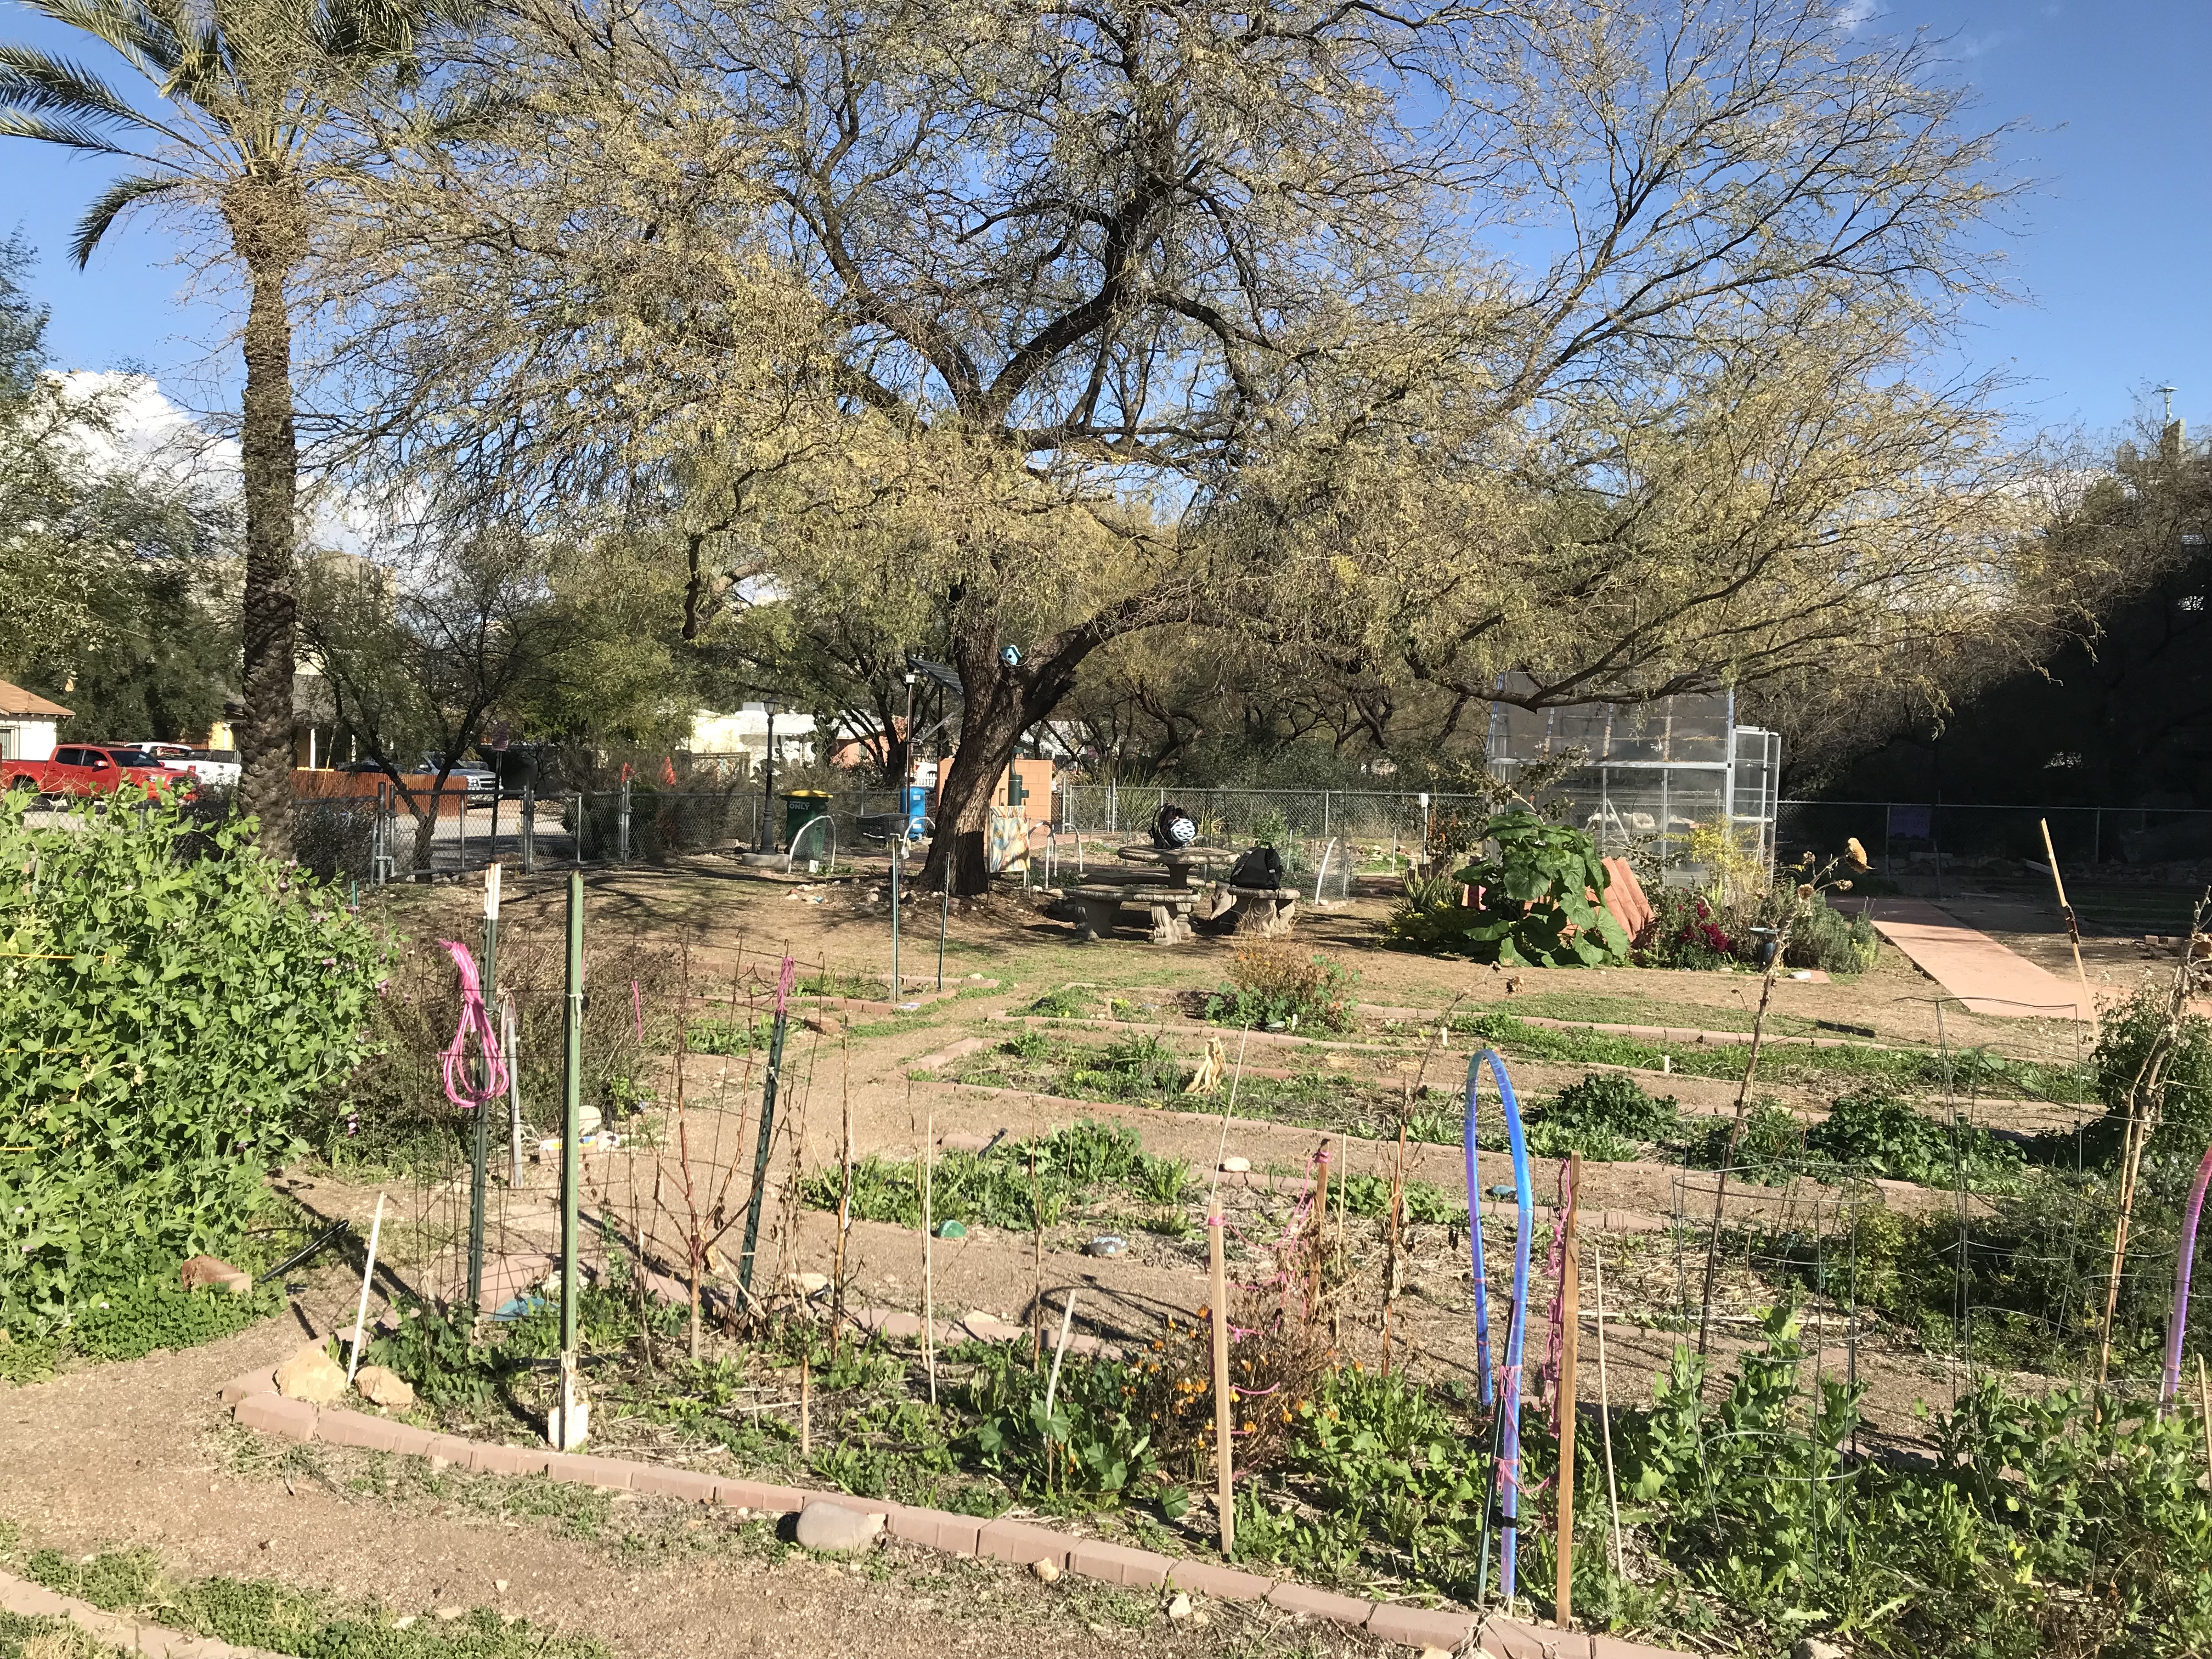 University of Arizona Community Garden